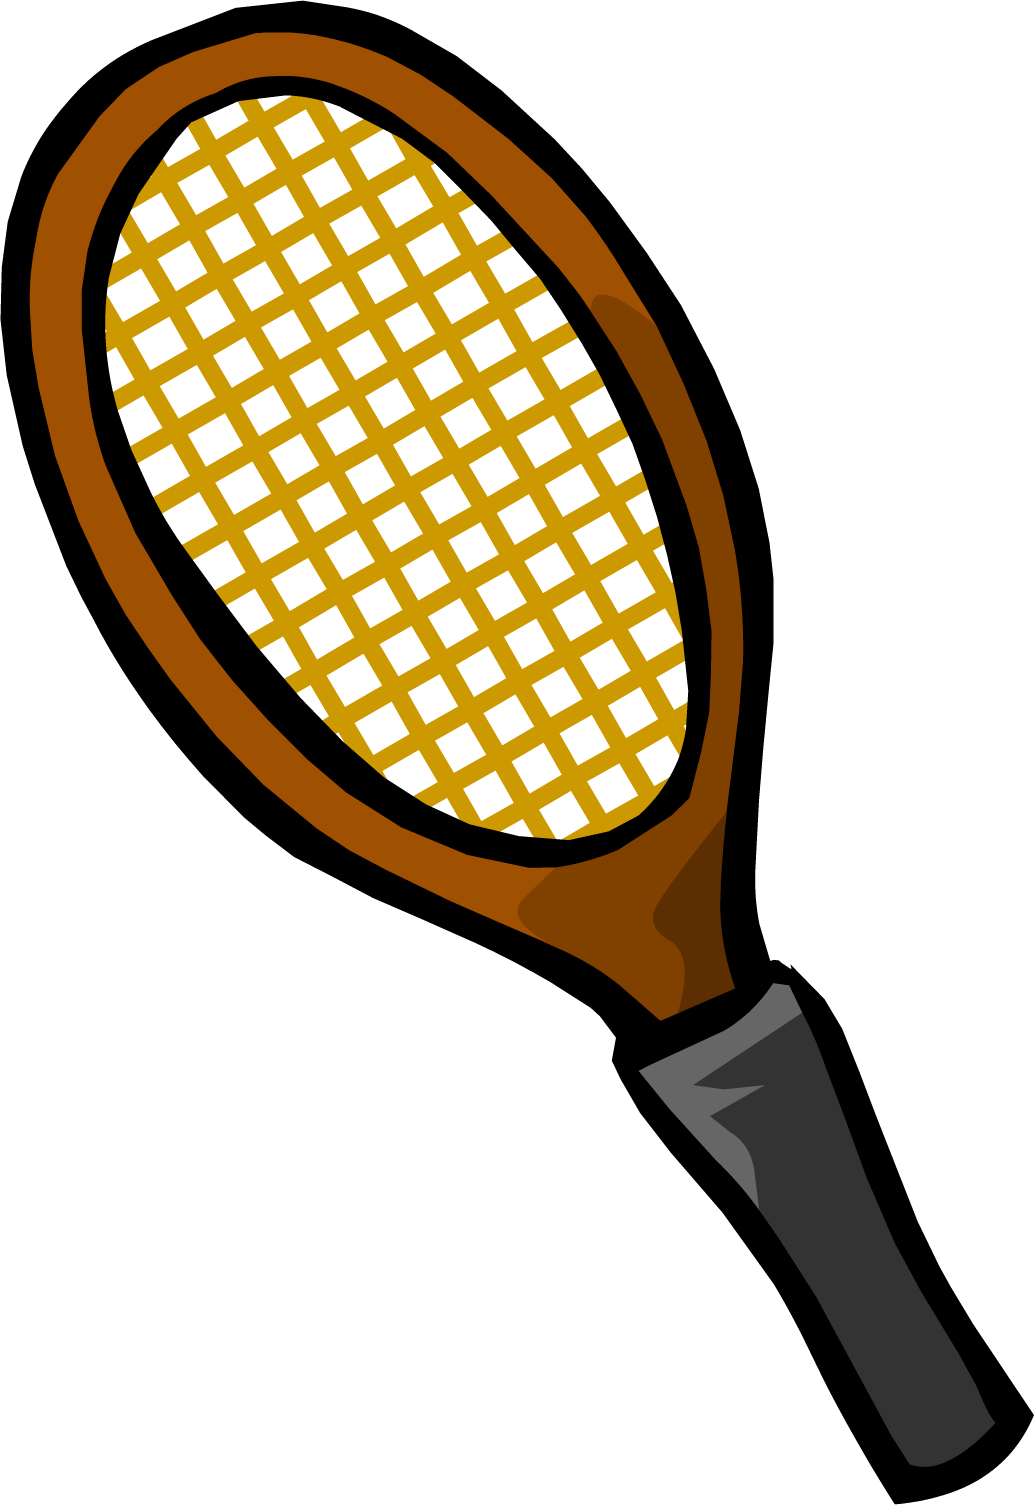 Tennis Racket - Club Penguin Wiki - The free, editable ...